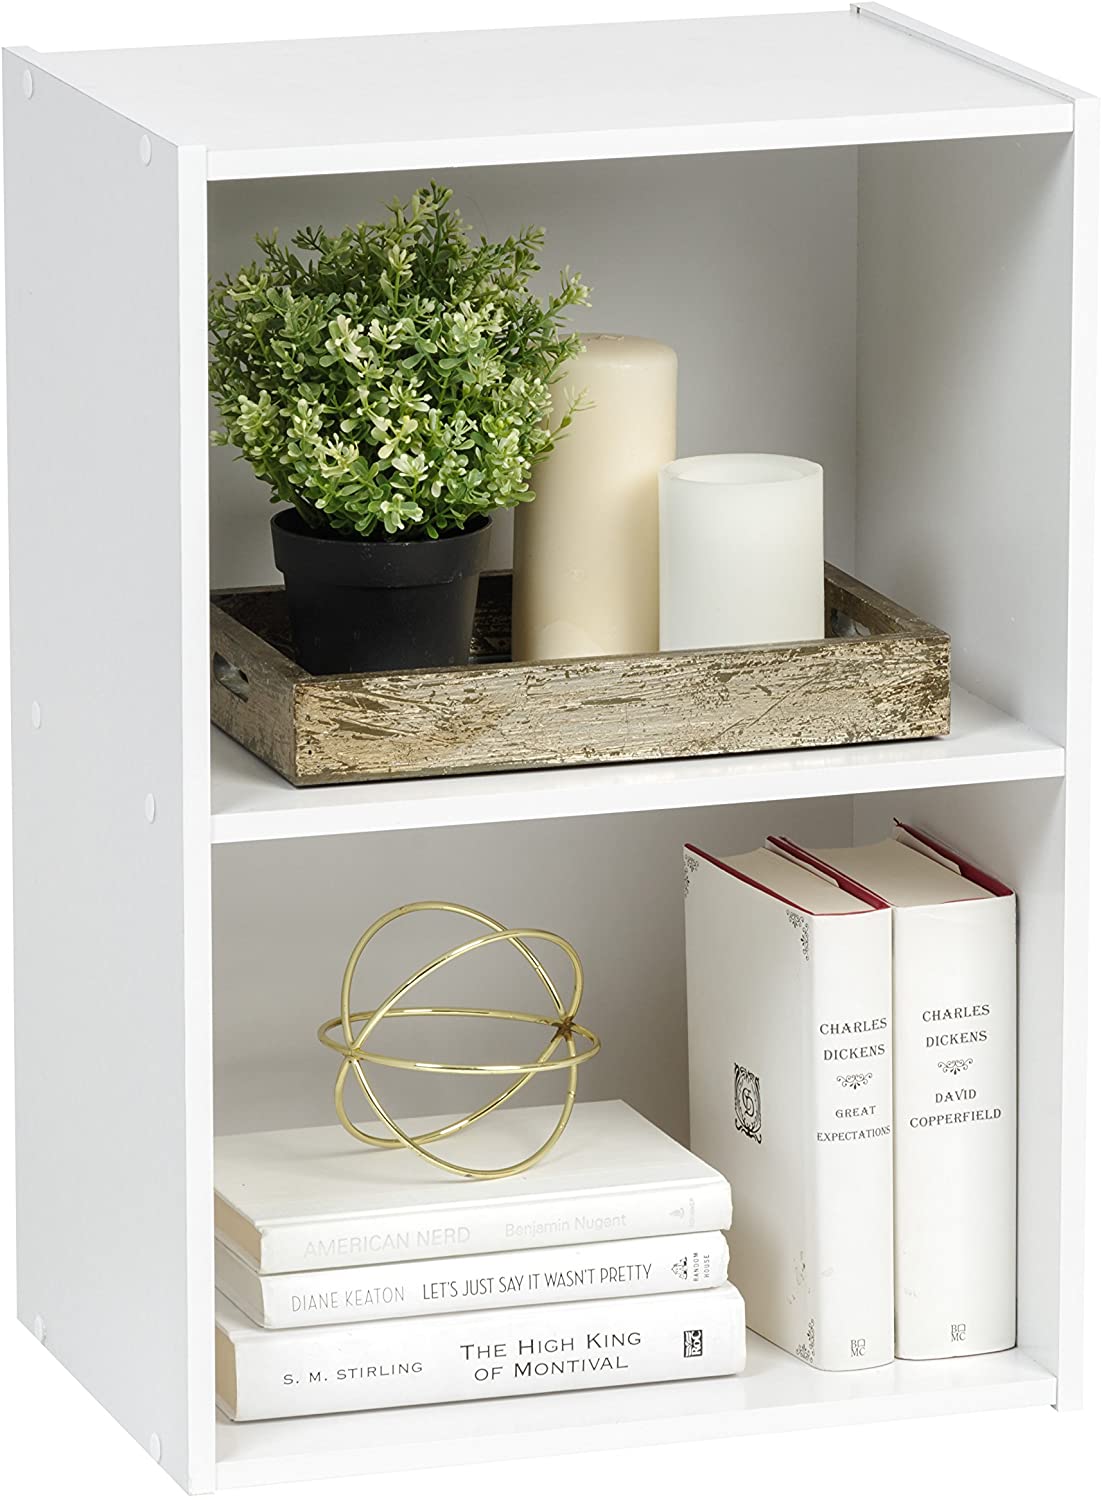 Bookshelf: Modern 2 Tier Shelf Small Bookcase